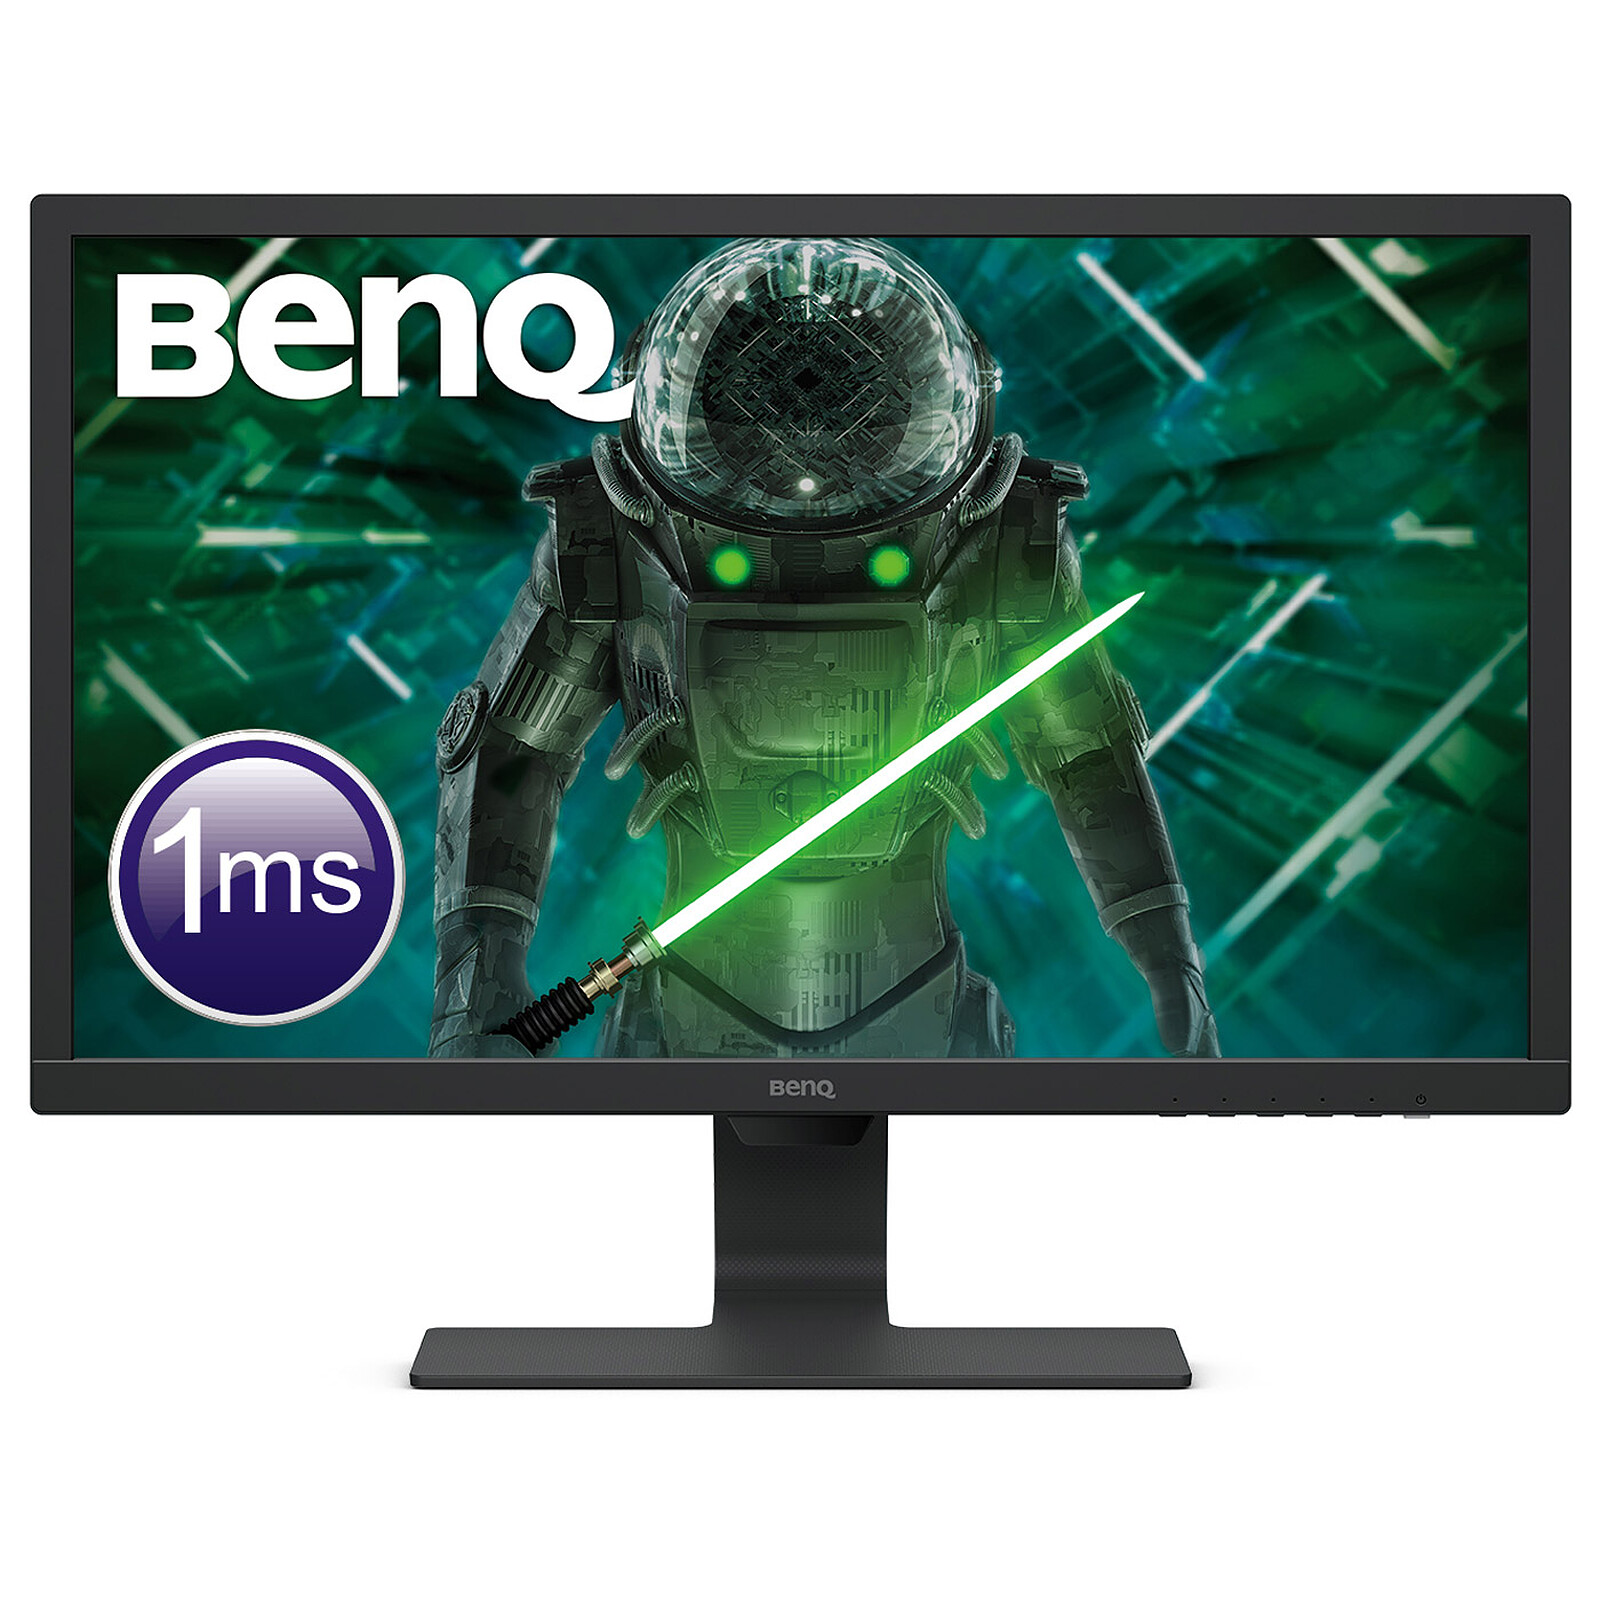 BenQ 24 LED - GL2480 - Ecran PC - Garantie 3 ans LDLC